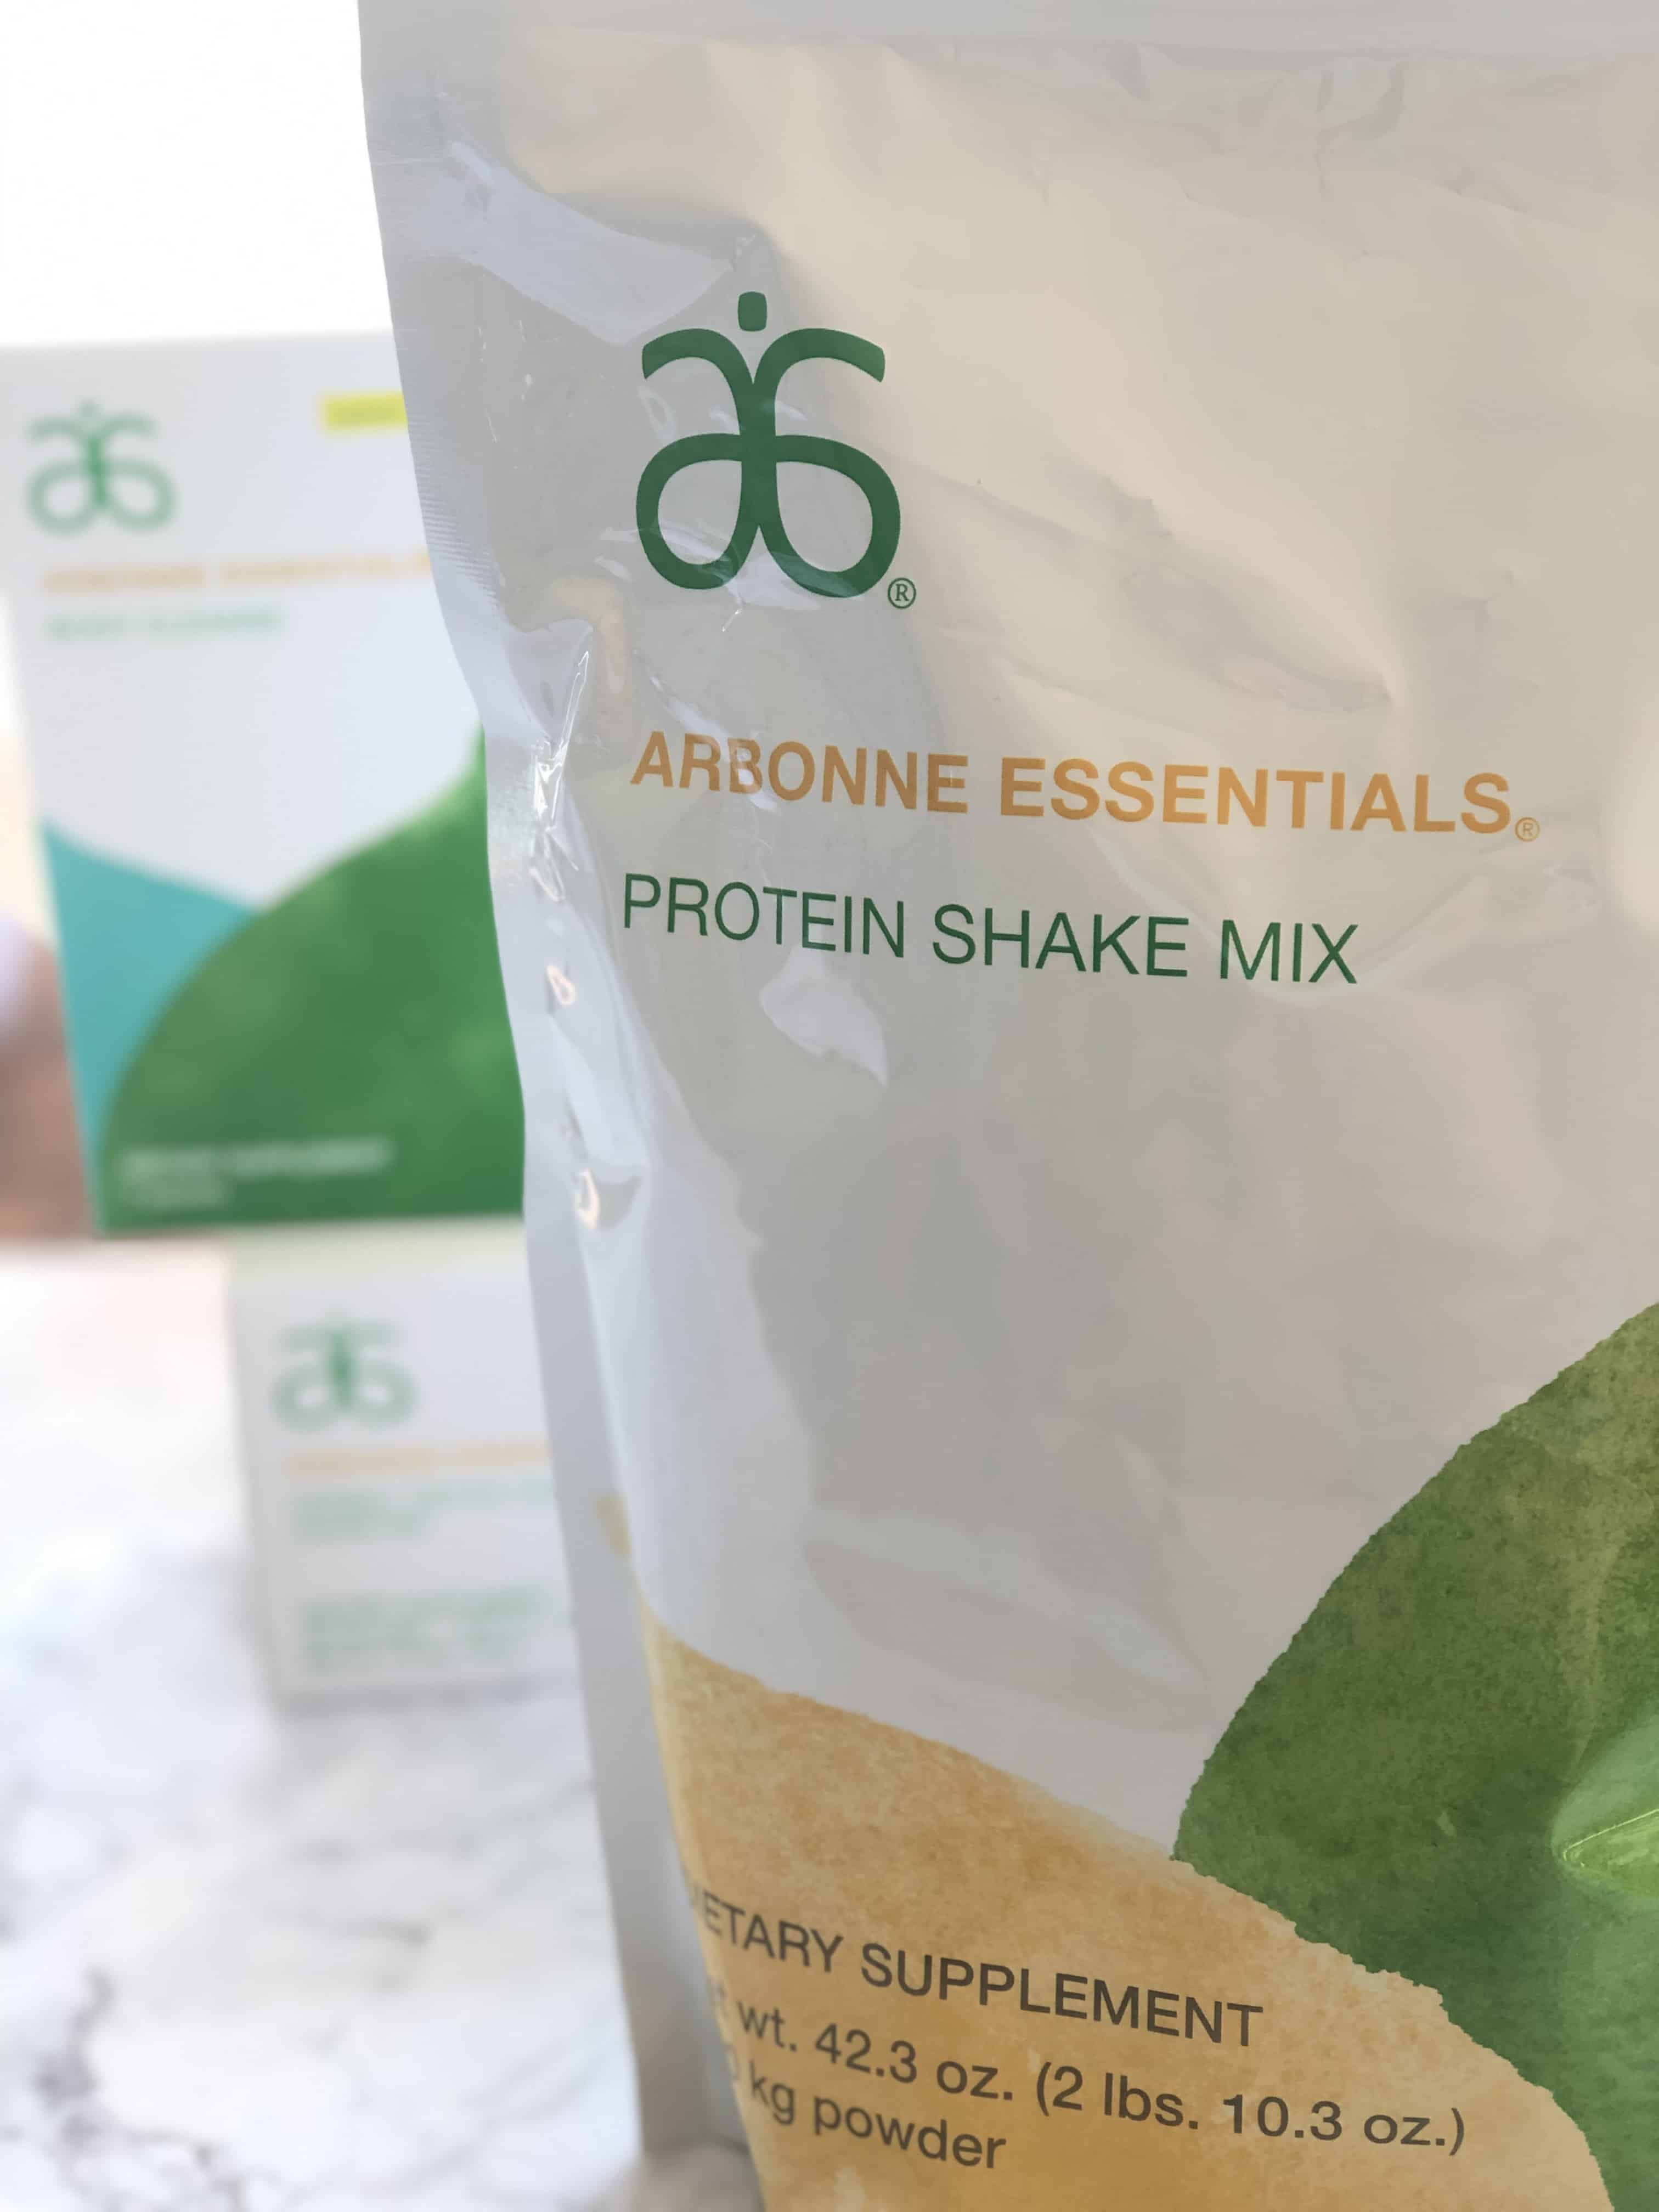 Arbonne Protein Shake Mix